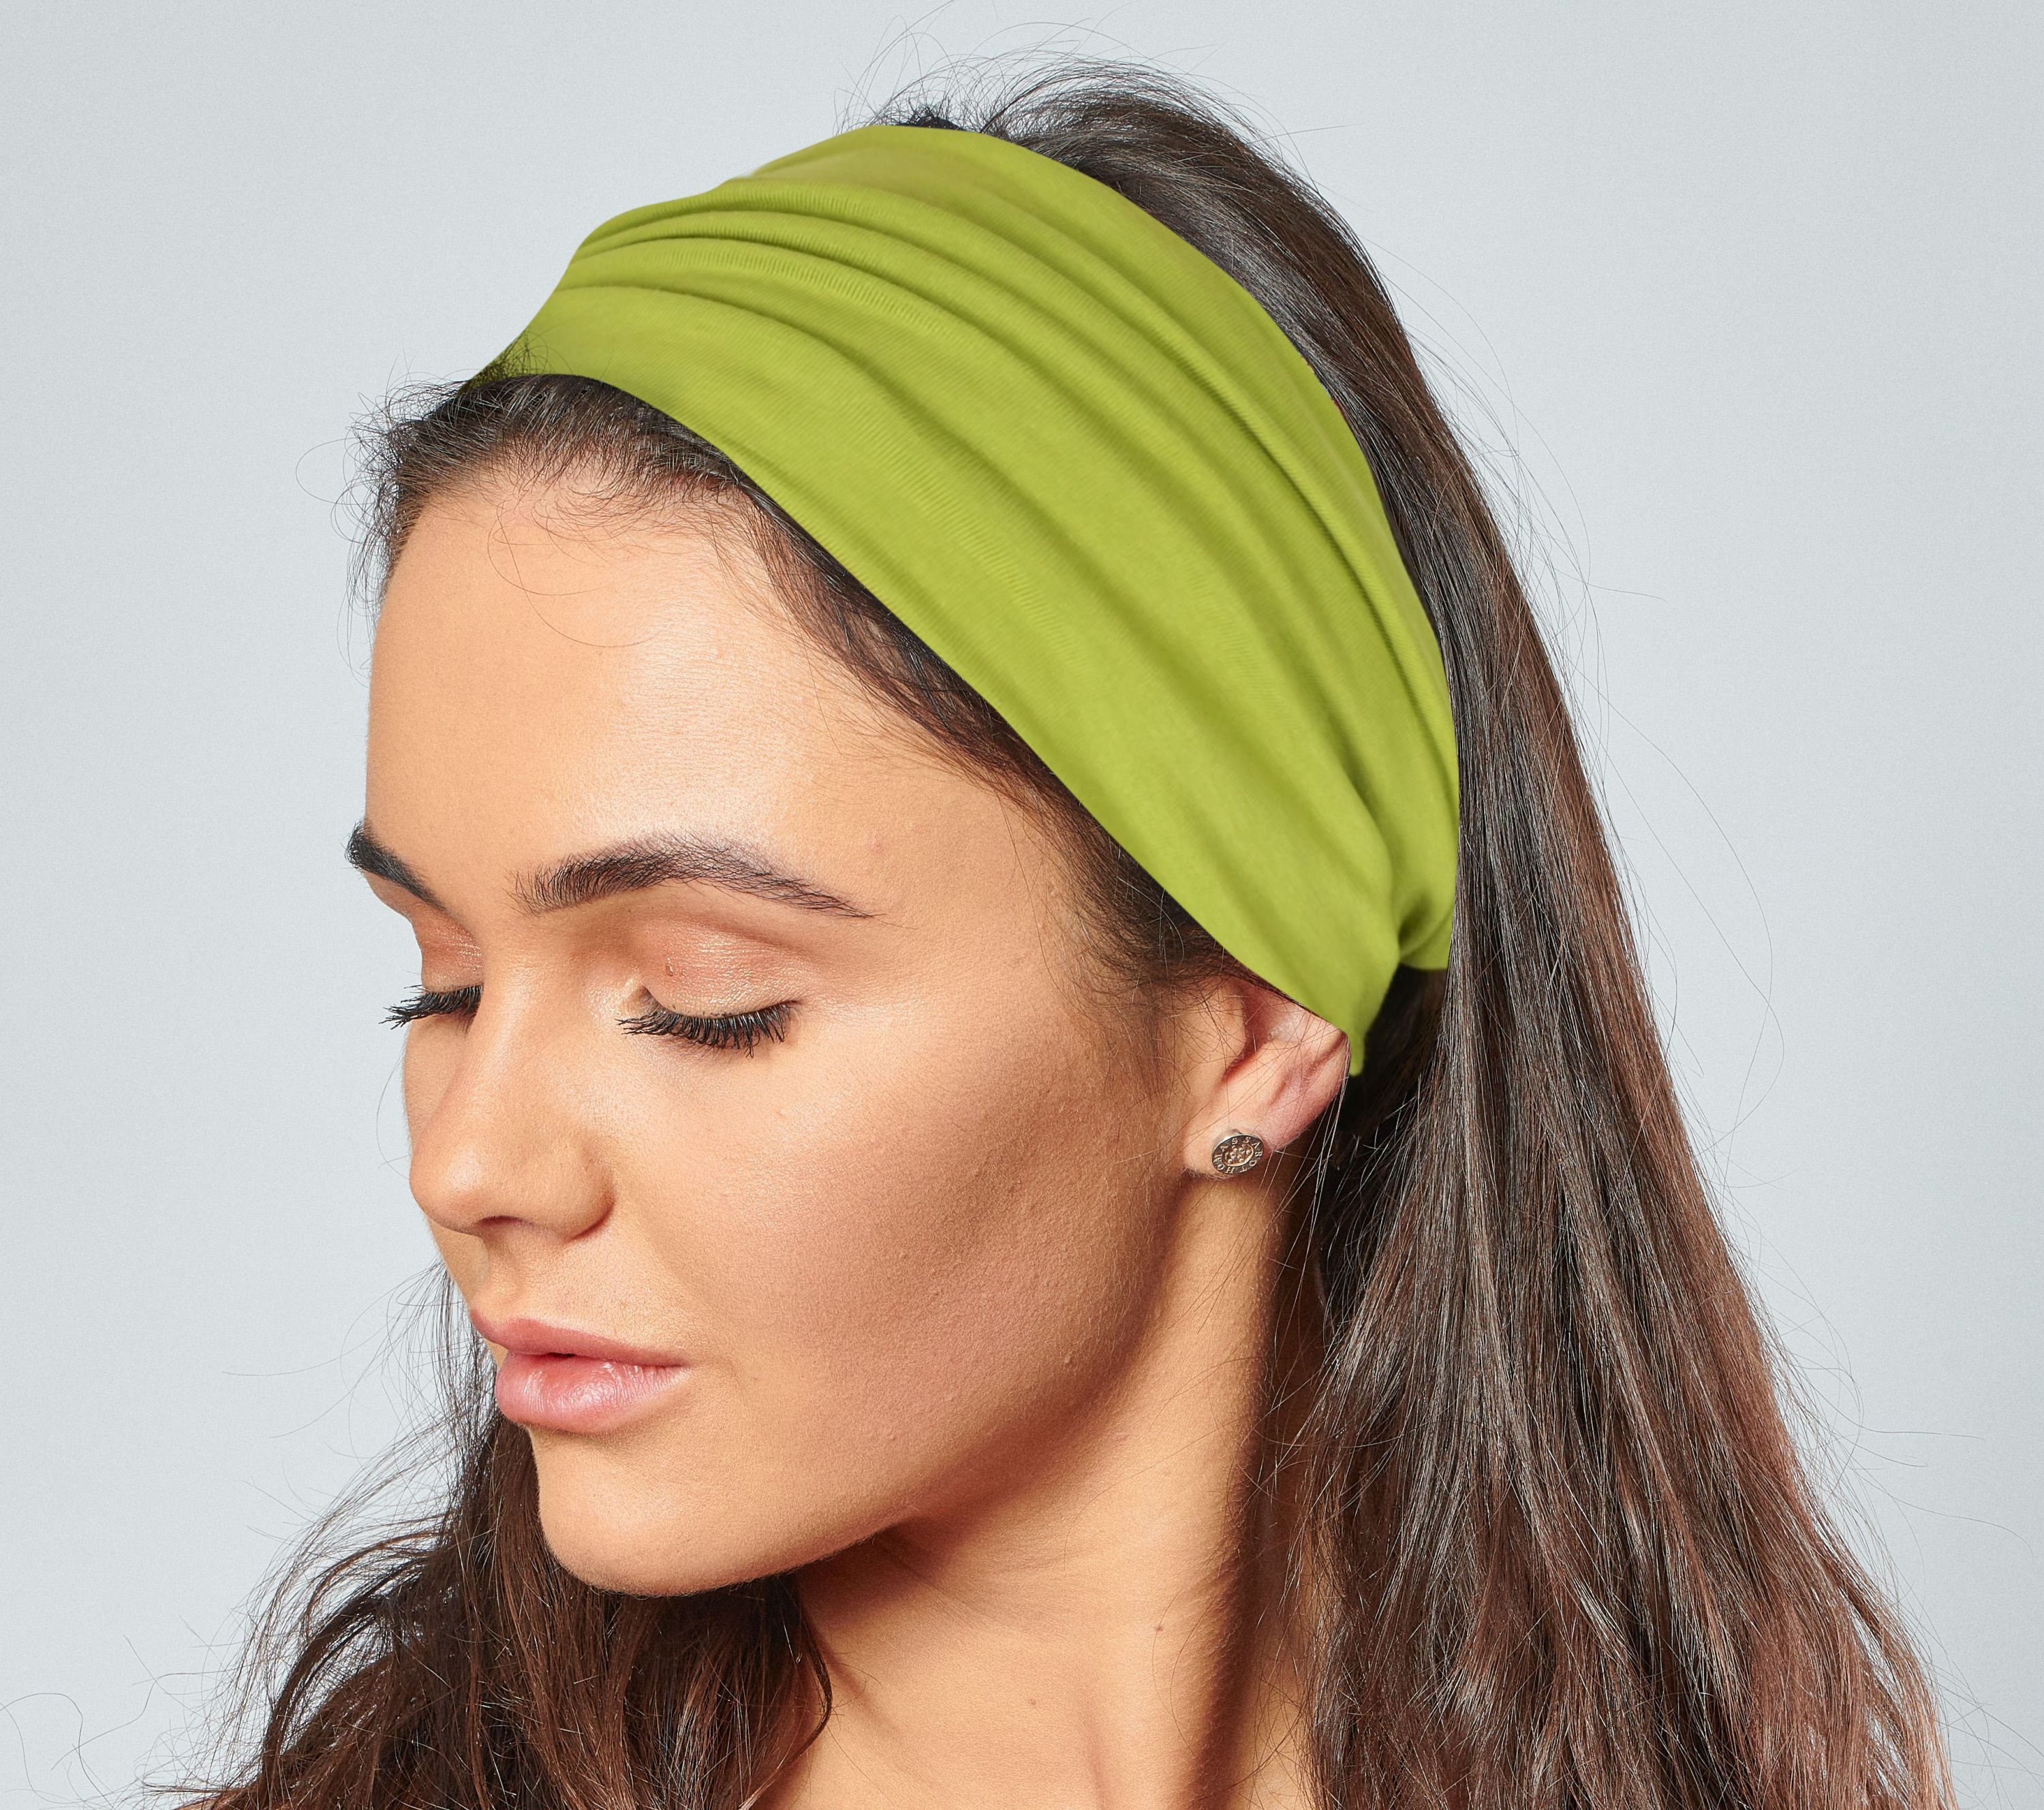 Headband for Women Black Wide Comfortable Non Slip Cotton Jersey